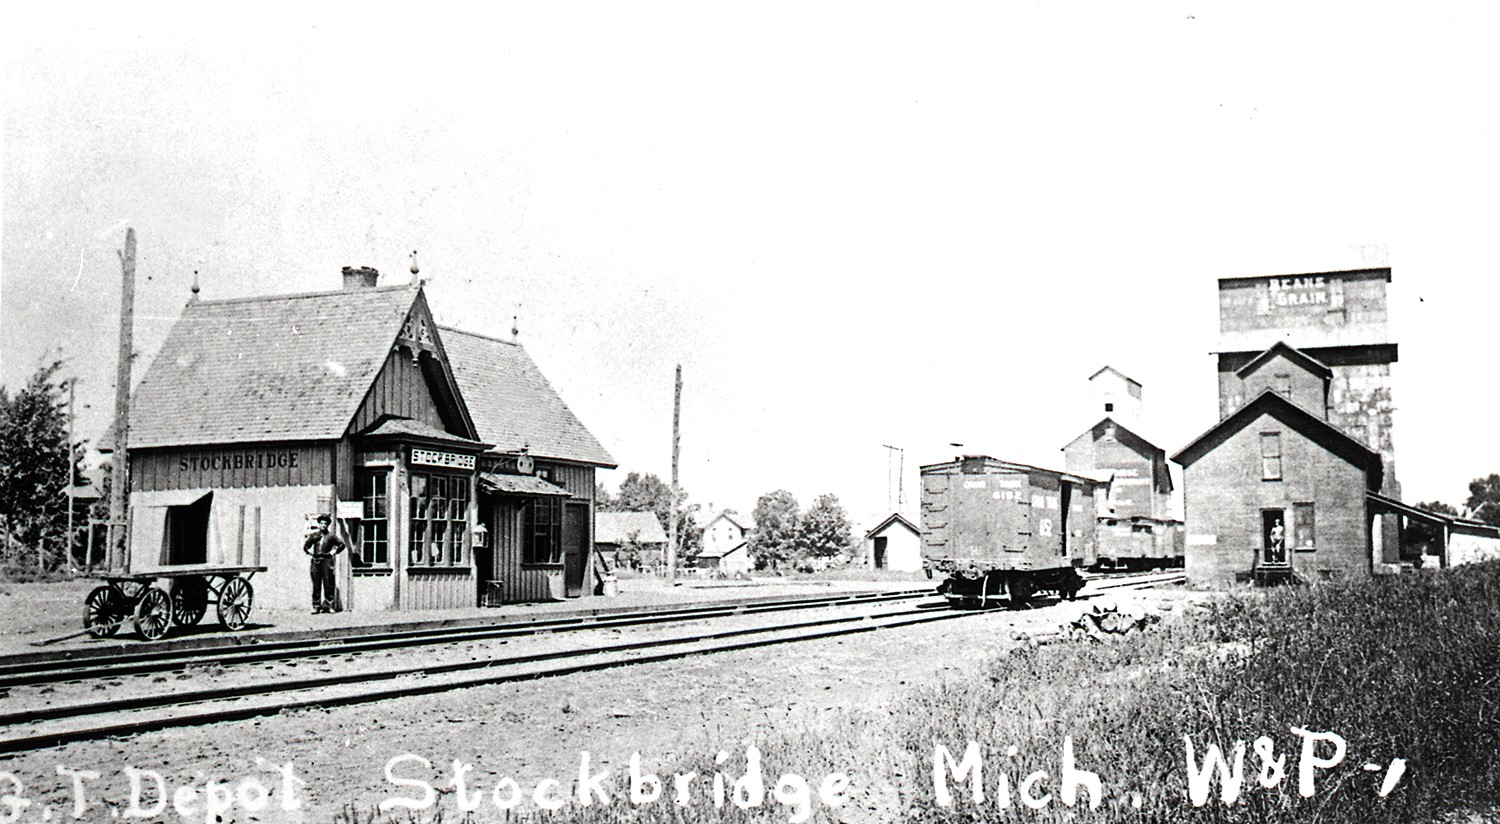 Stockbridge Depot